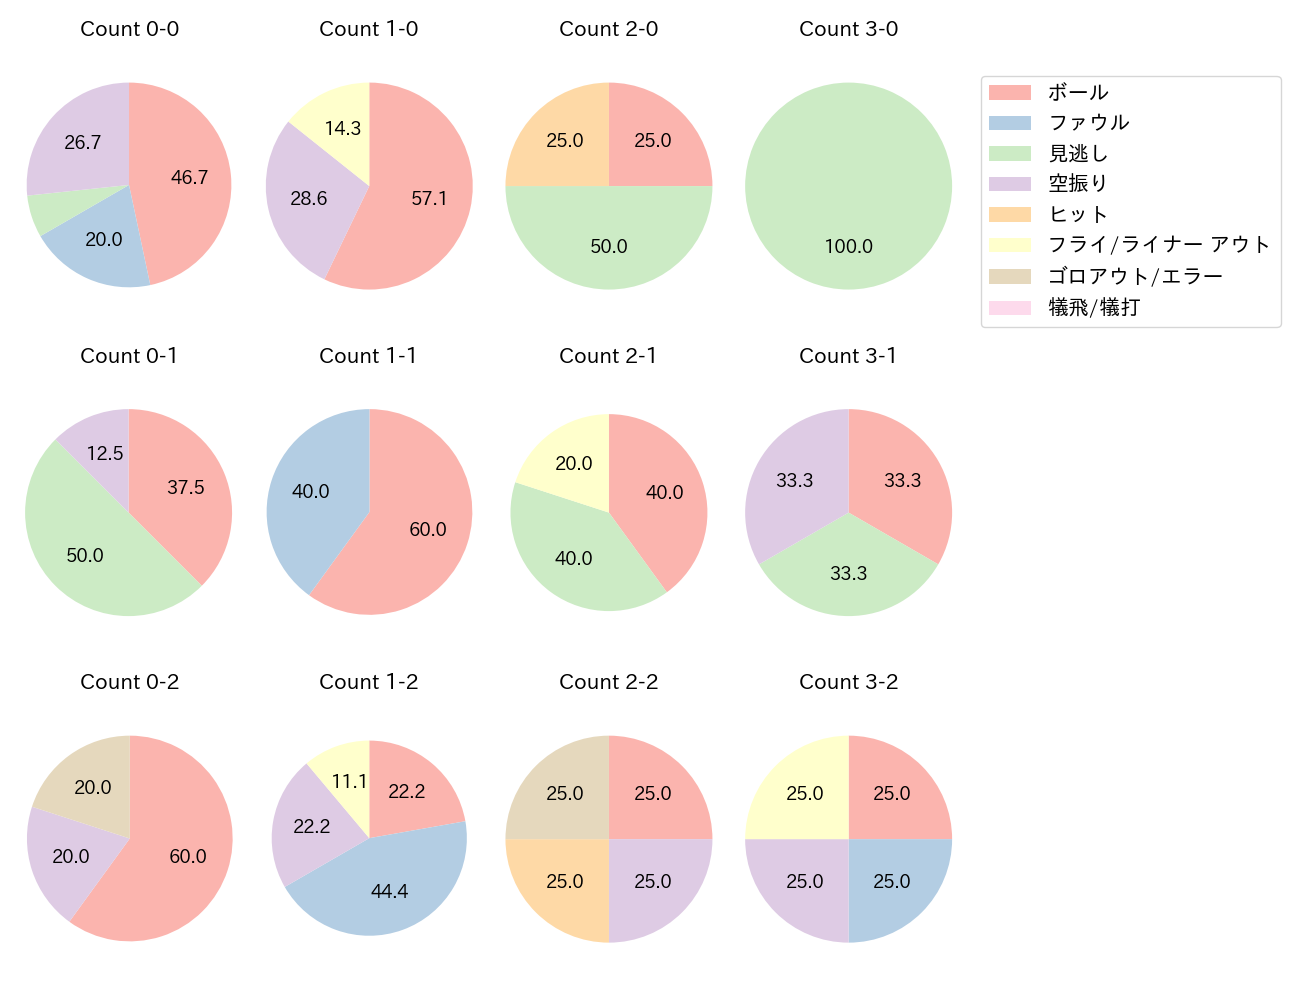 正木 智也の球数分布(2022年4月)